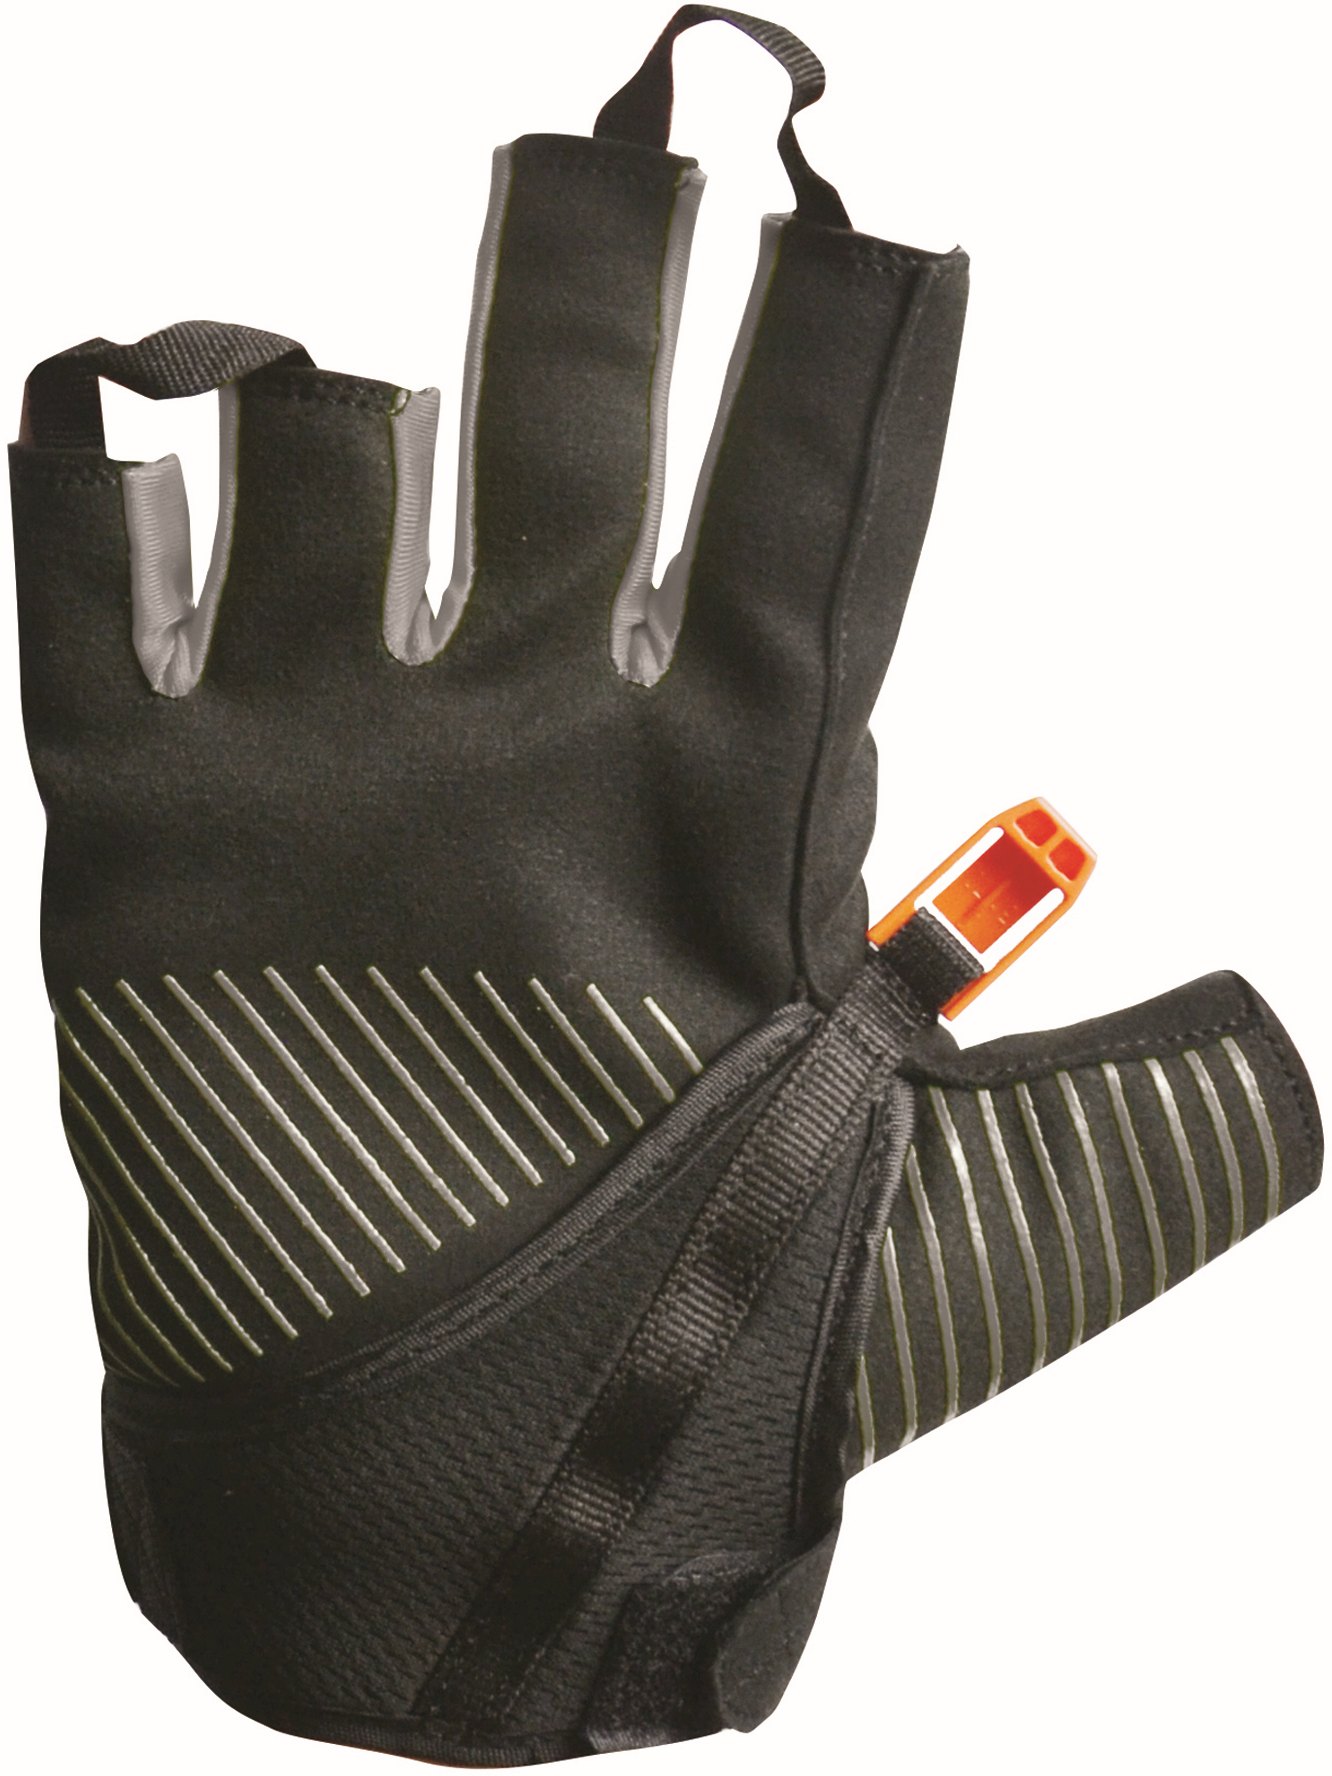 Nordic walking hand gloves